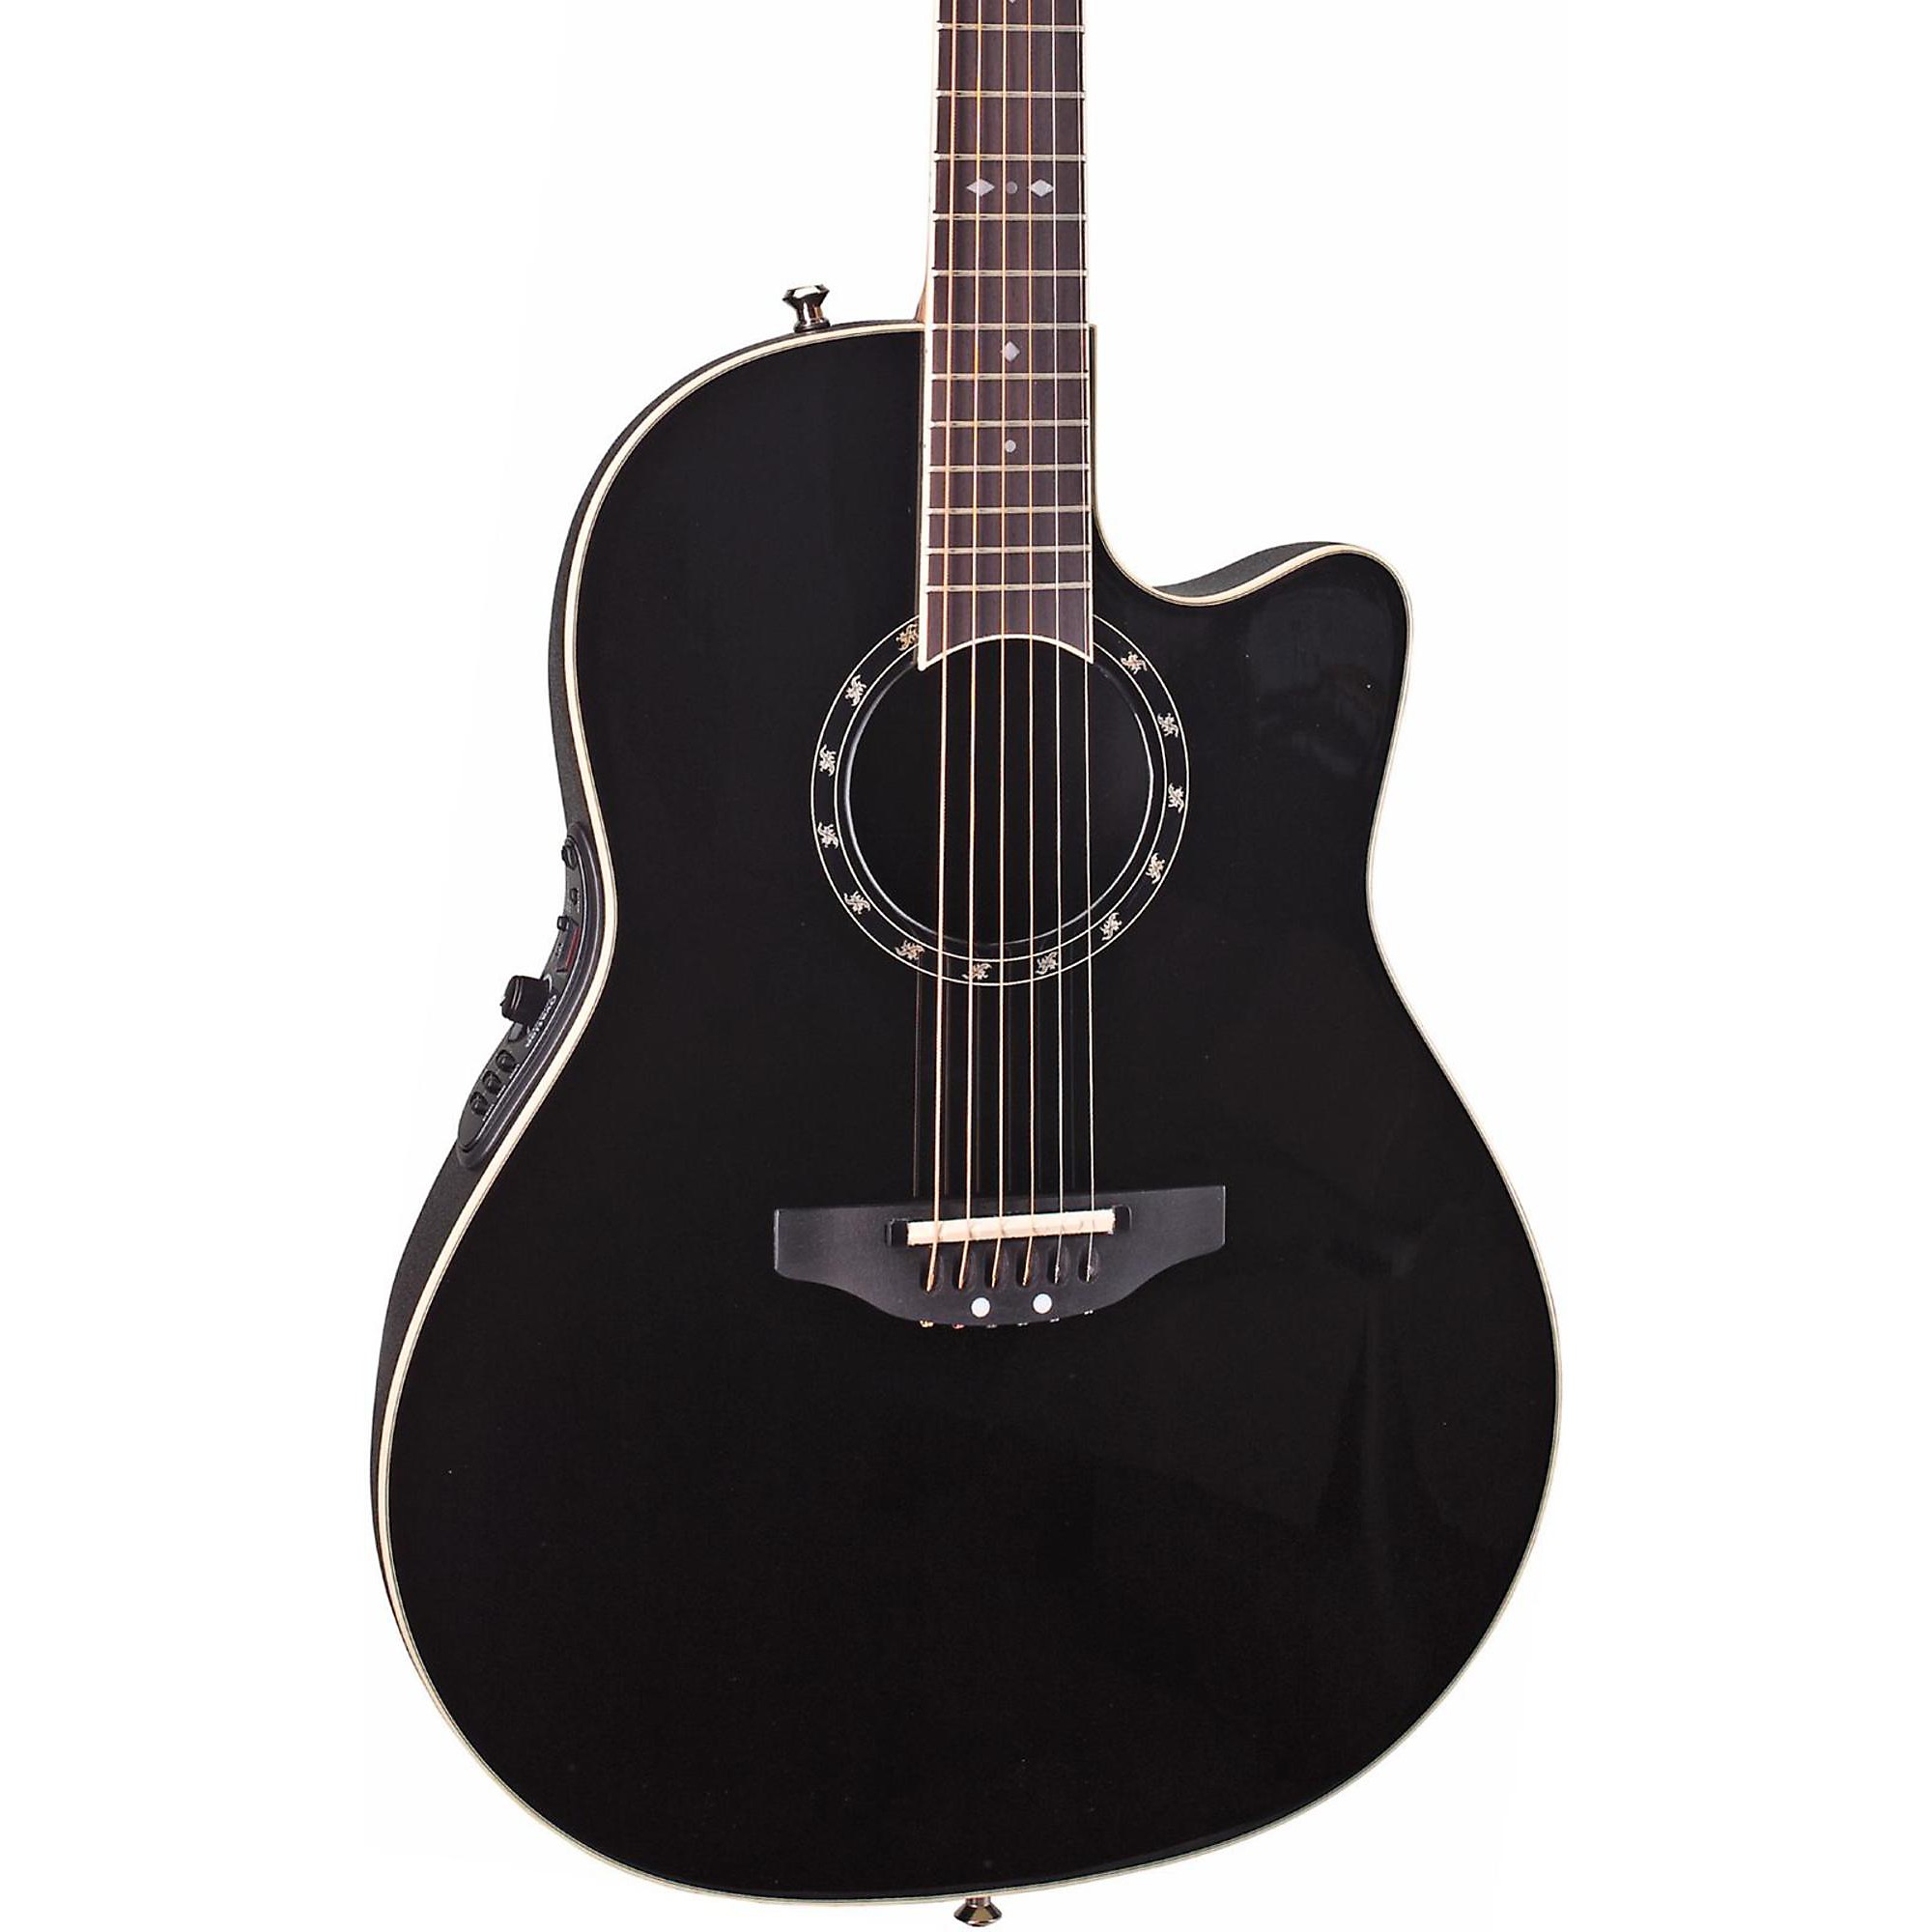 Акустически-электрическая гитара Ovation Standard Balladeer 2771 AX черная ovation 2751ax 5 standard balladeer® электроакустическая 12 струнная гитара